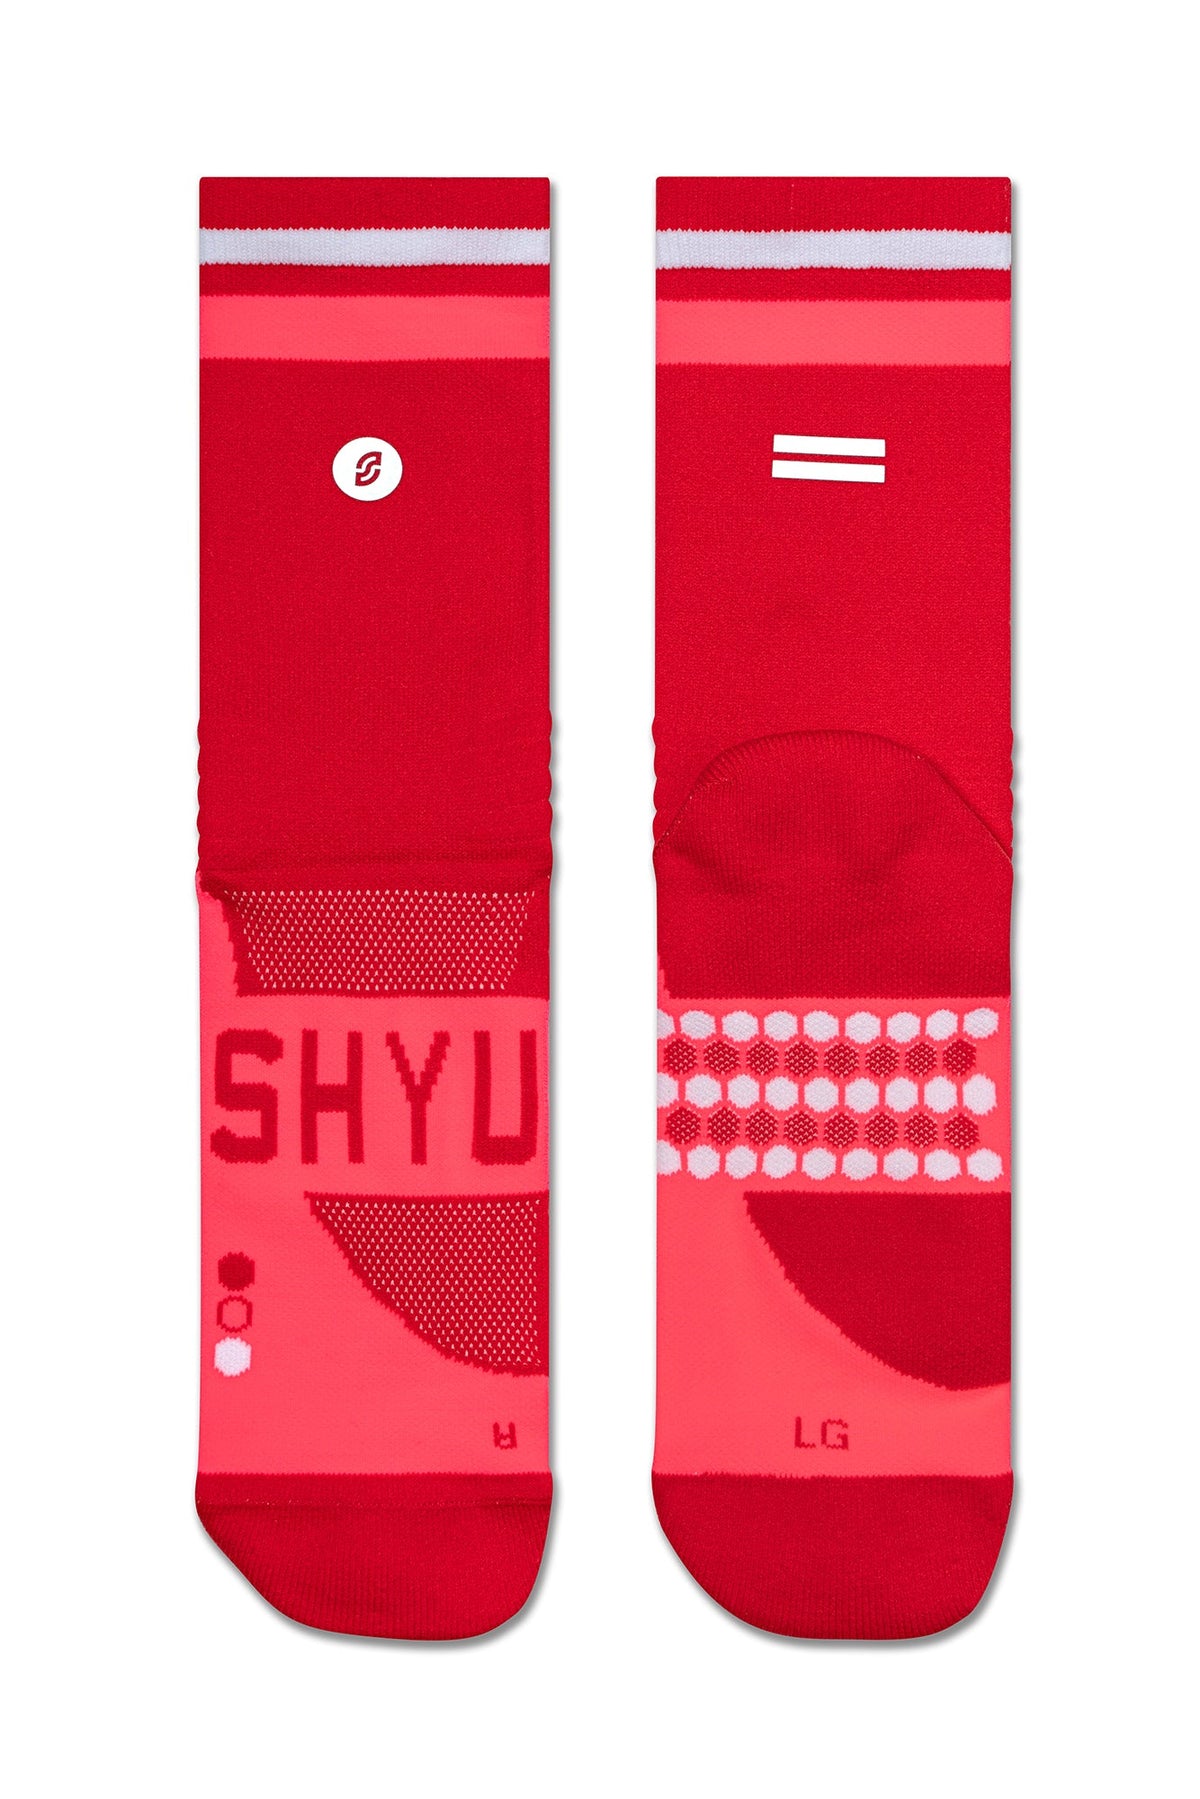 SHYU racing socks - red | pink | white (small sizes)